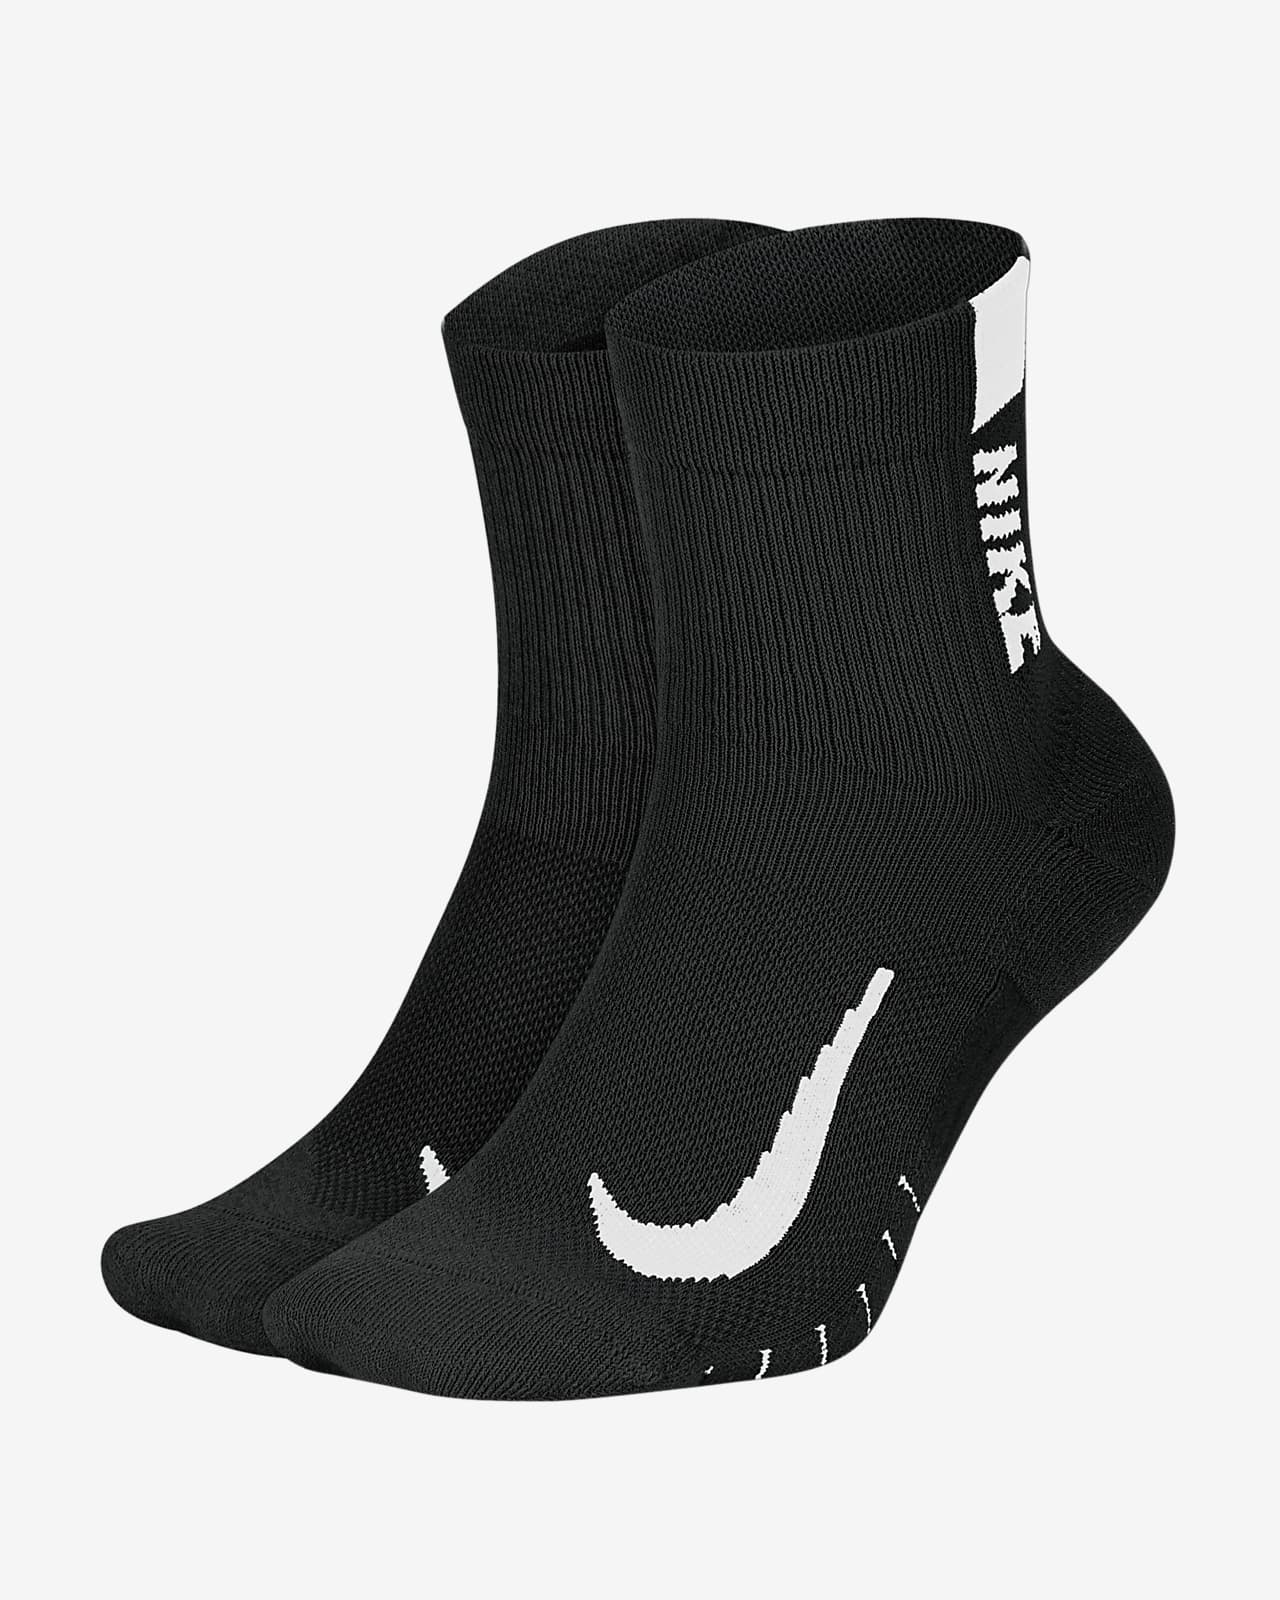 Nike Multiplier bokazokni futáshoz (2 pár)